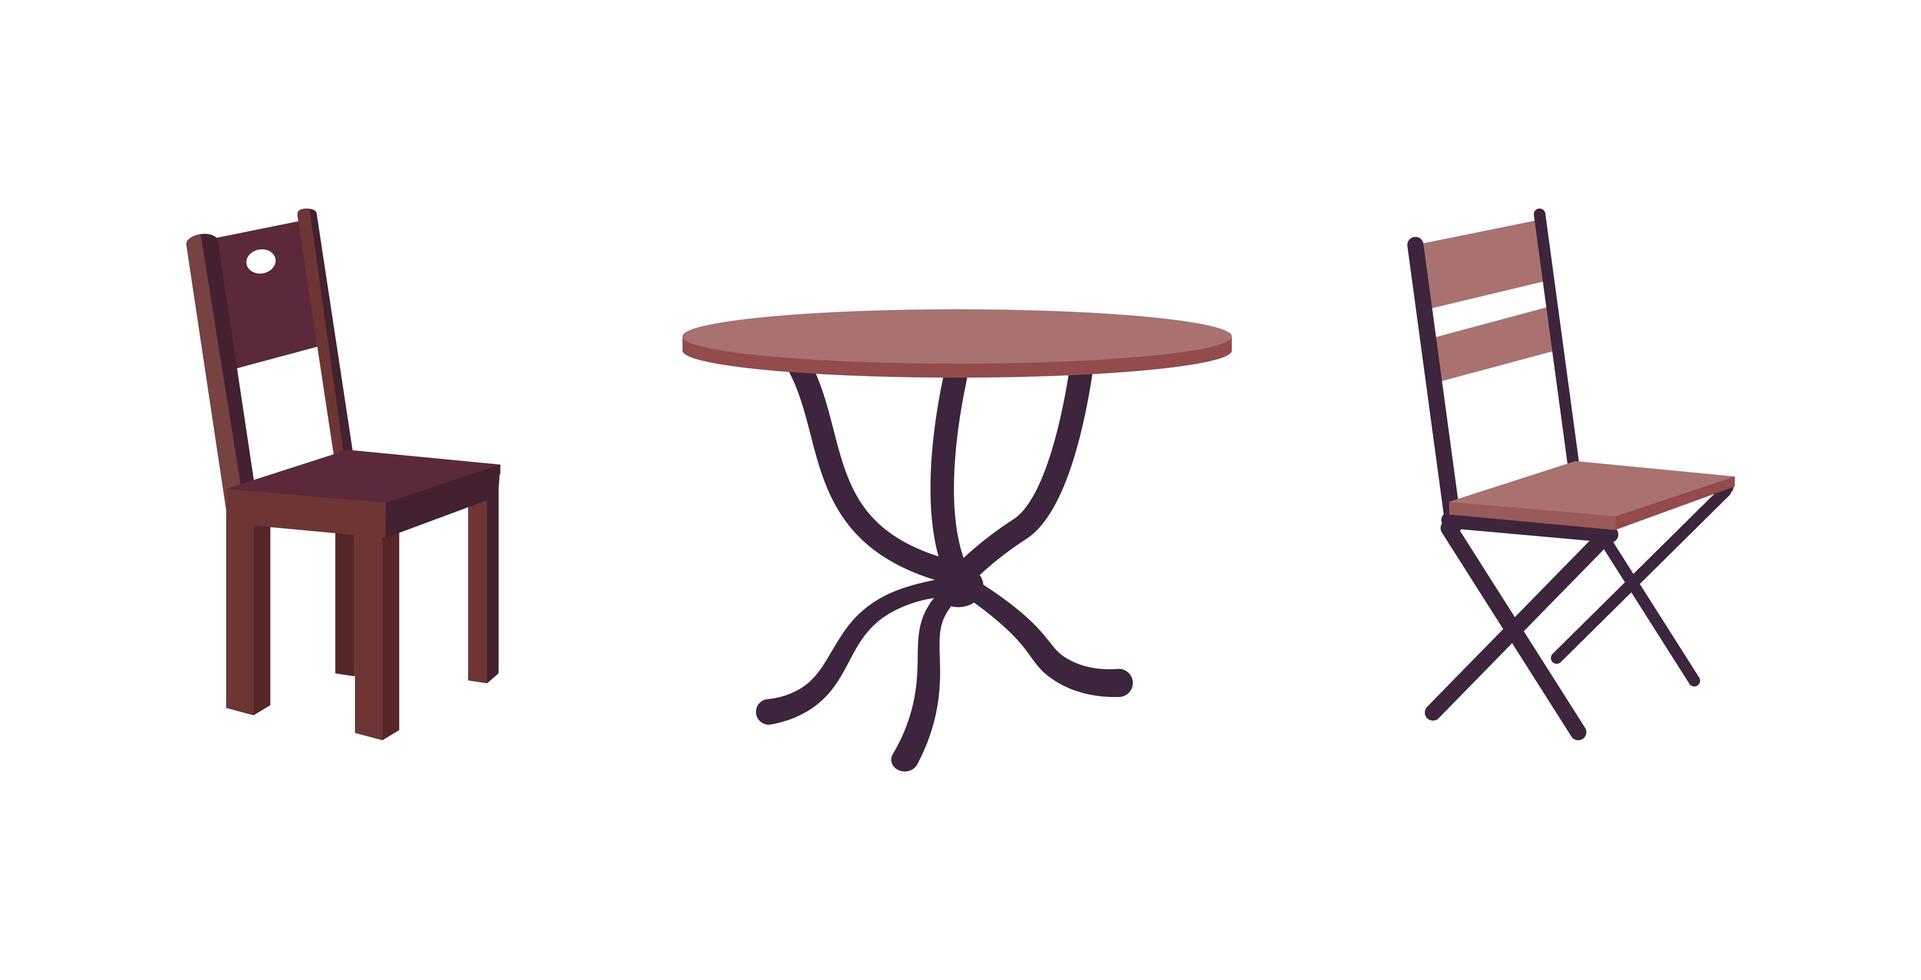 eigentijds café meubilair egale kleur vector-object ingesteld vector